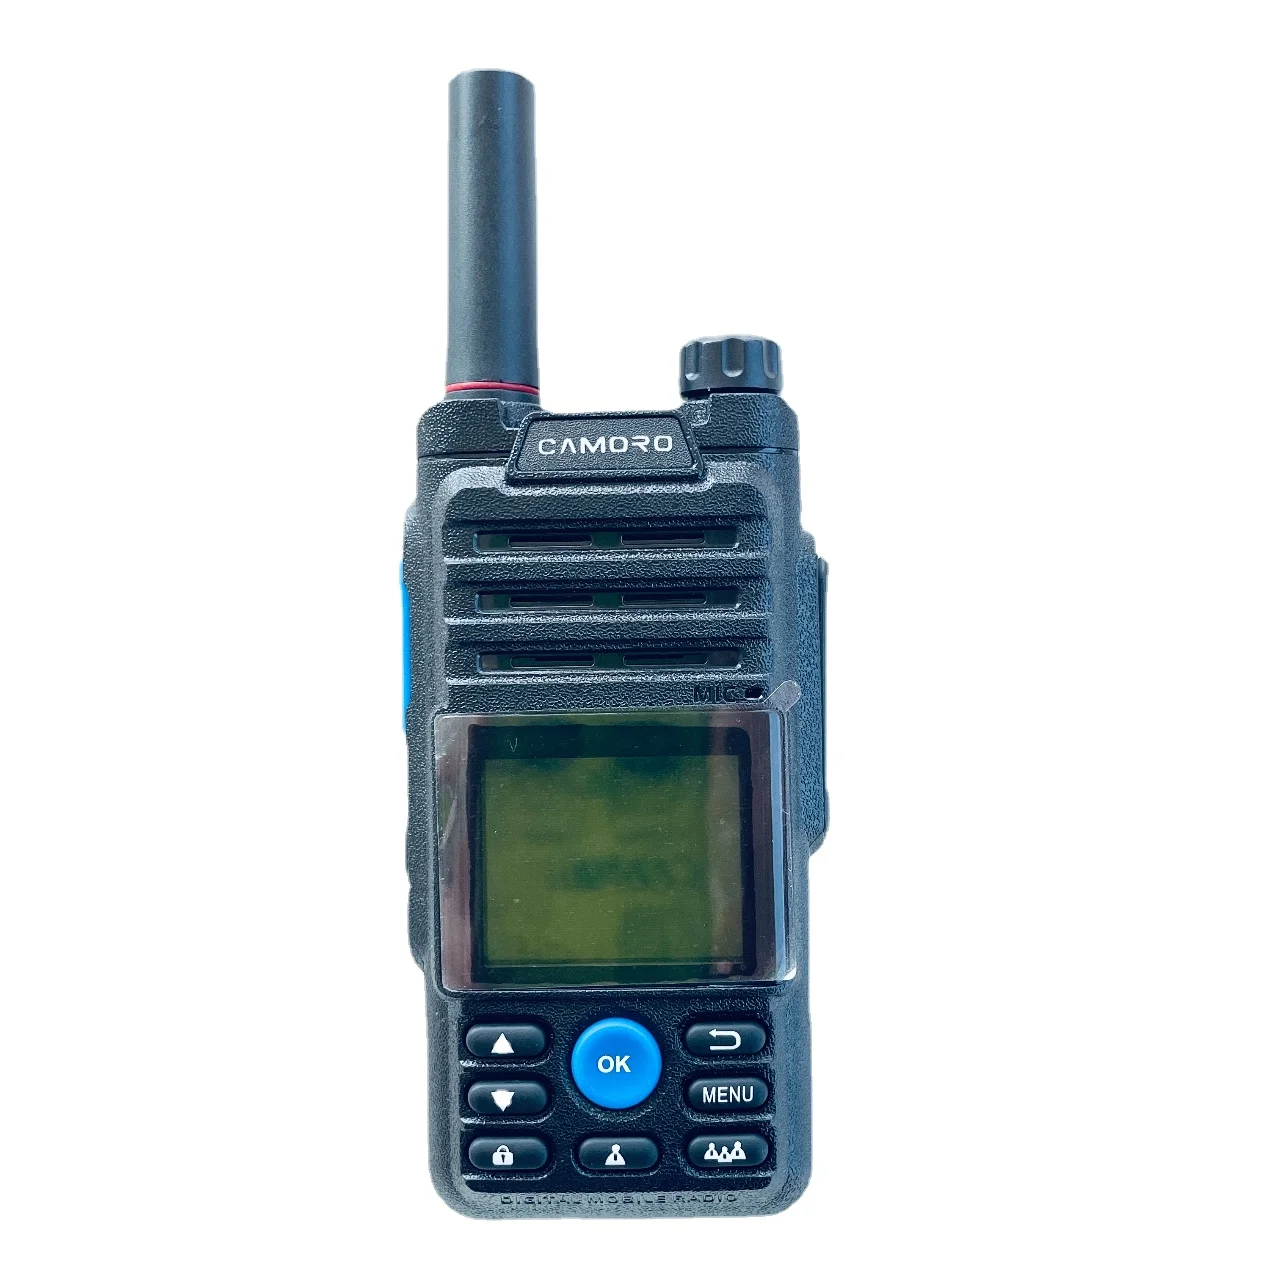 long range walkie talkies 1000 miles Zello Walkie Talkie With WiFi BT 4G Network Radio Zello Android Walkie Talkie PTT Mobile Phone walkie talkie 10 km Walkie Talkie